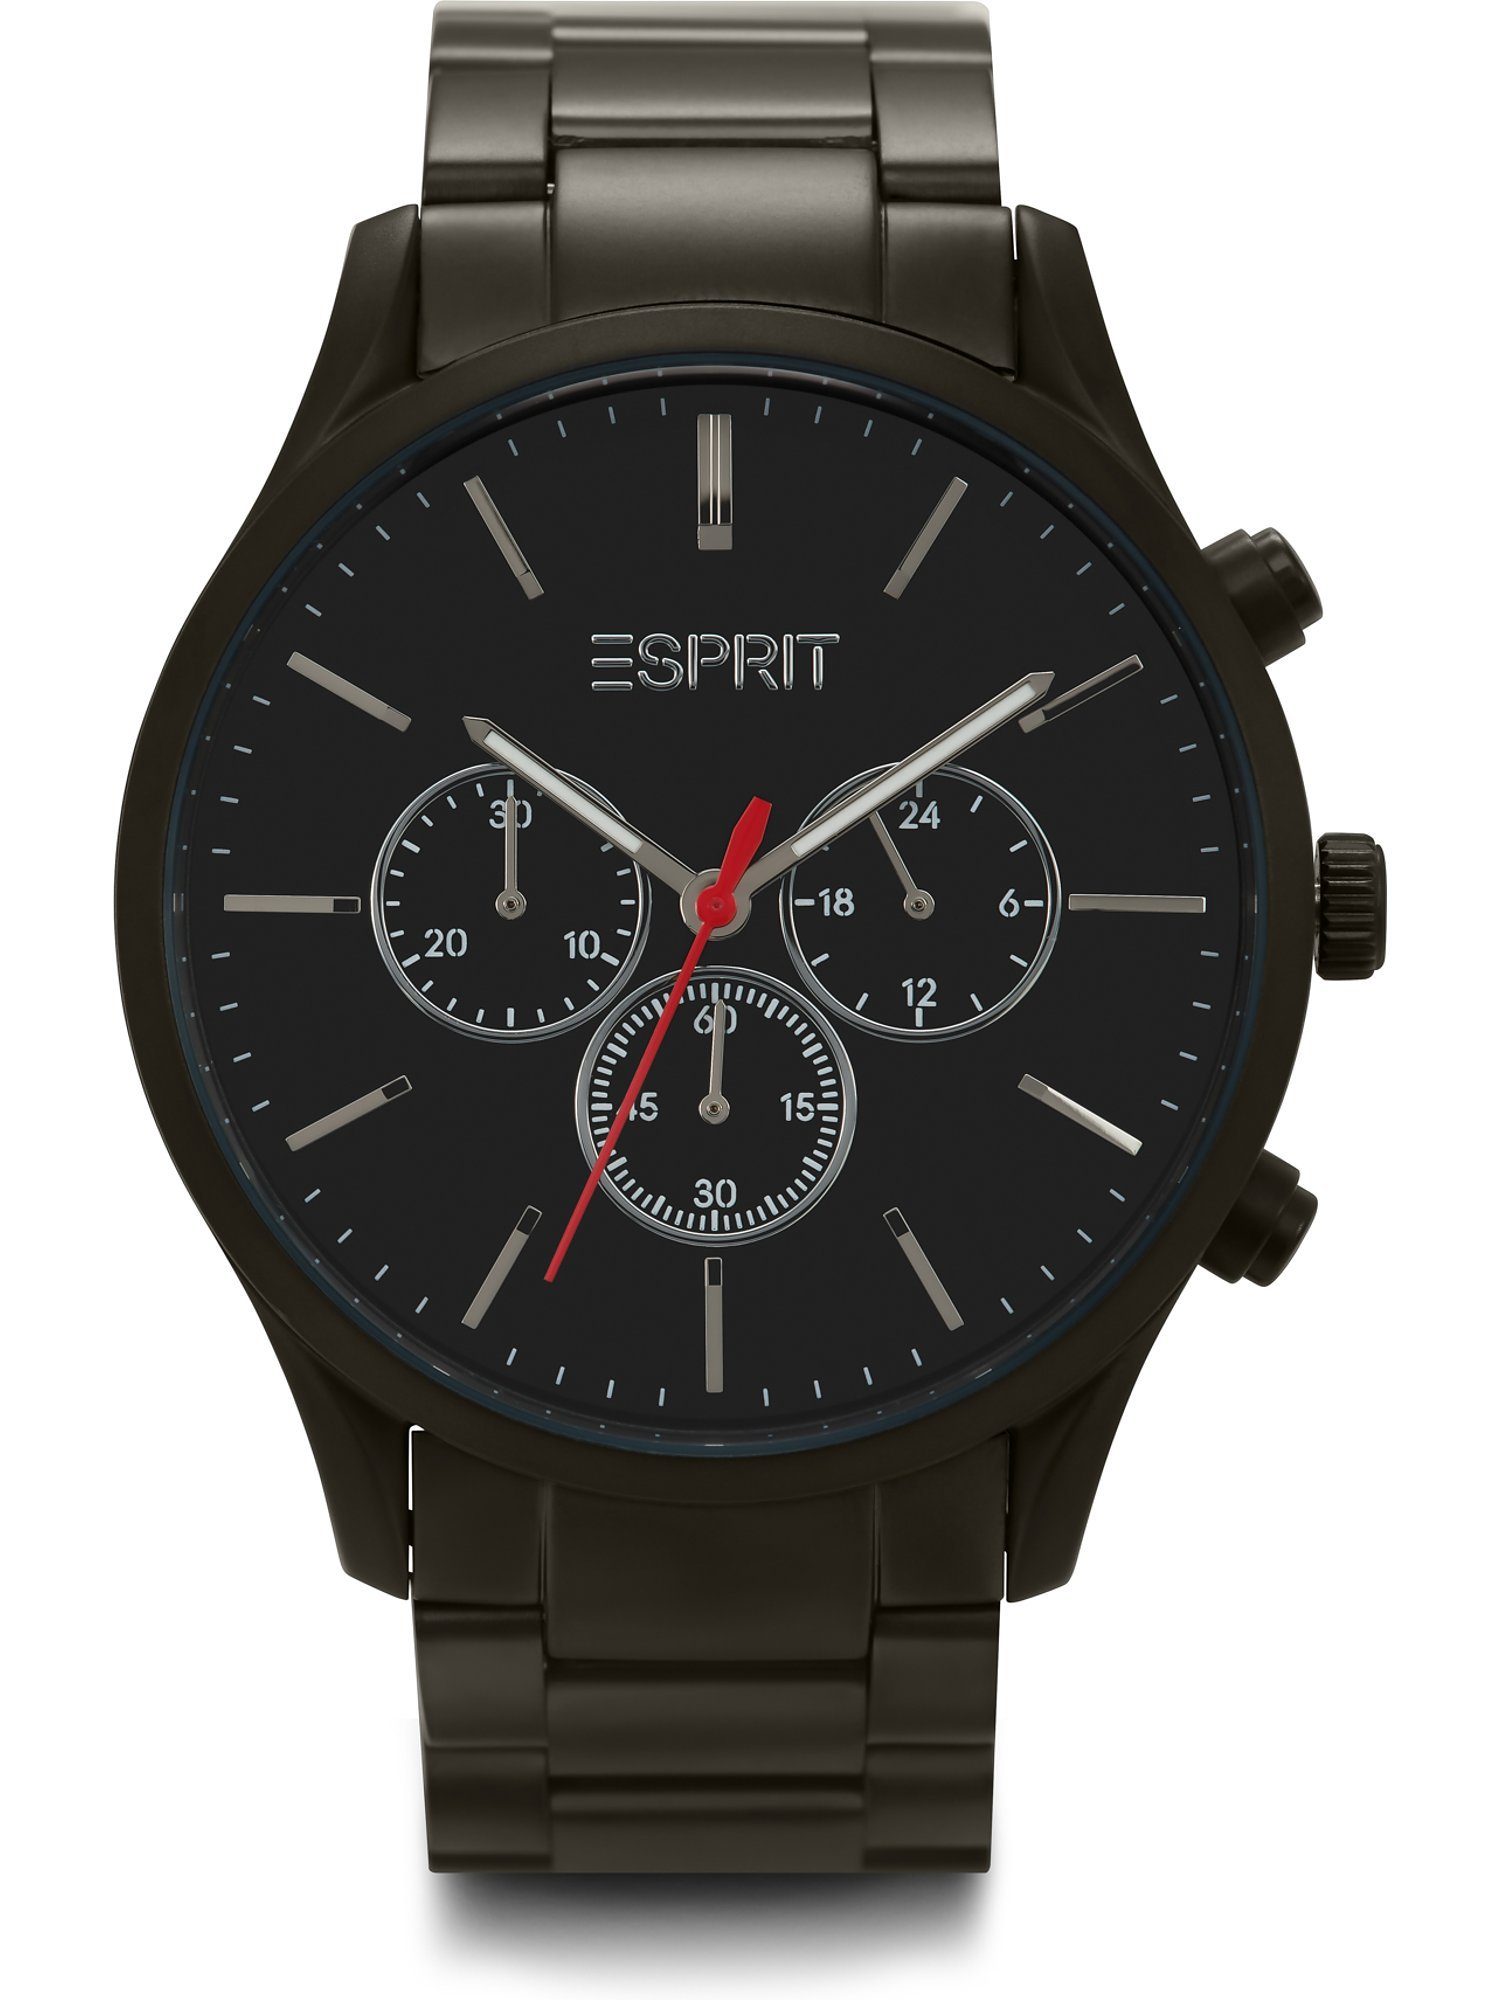 Esprit Quarzuhr ESPRIT Analog Herren-Uhren schwarz Klassikuhr Quarz